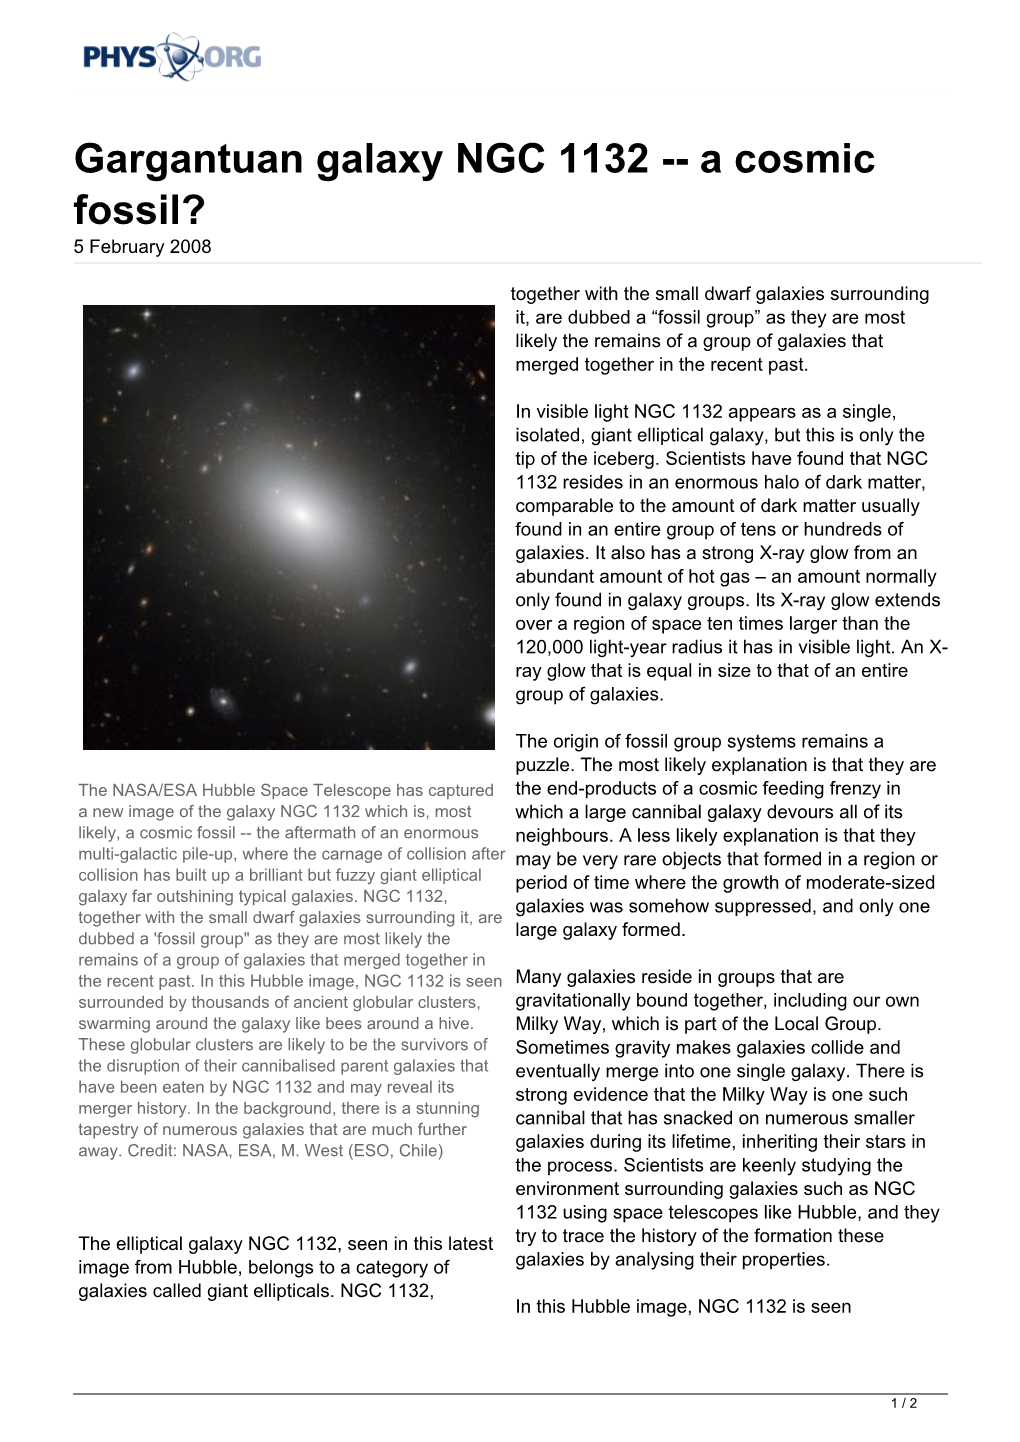 Gargantuan Galaxy NGC 1132 -- a Cosmic Fossil? 5 February 2008